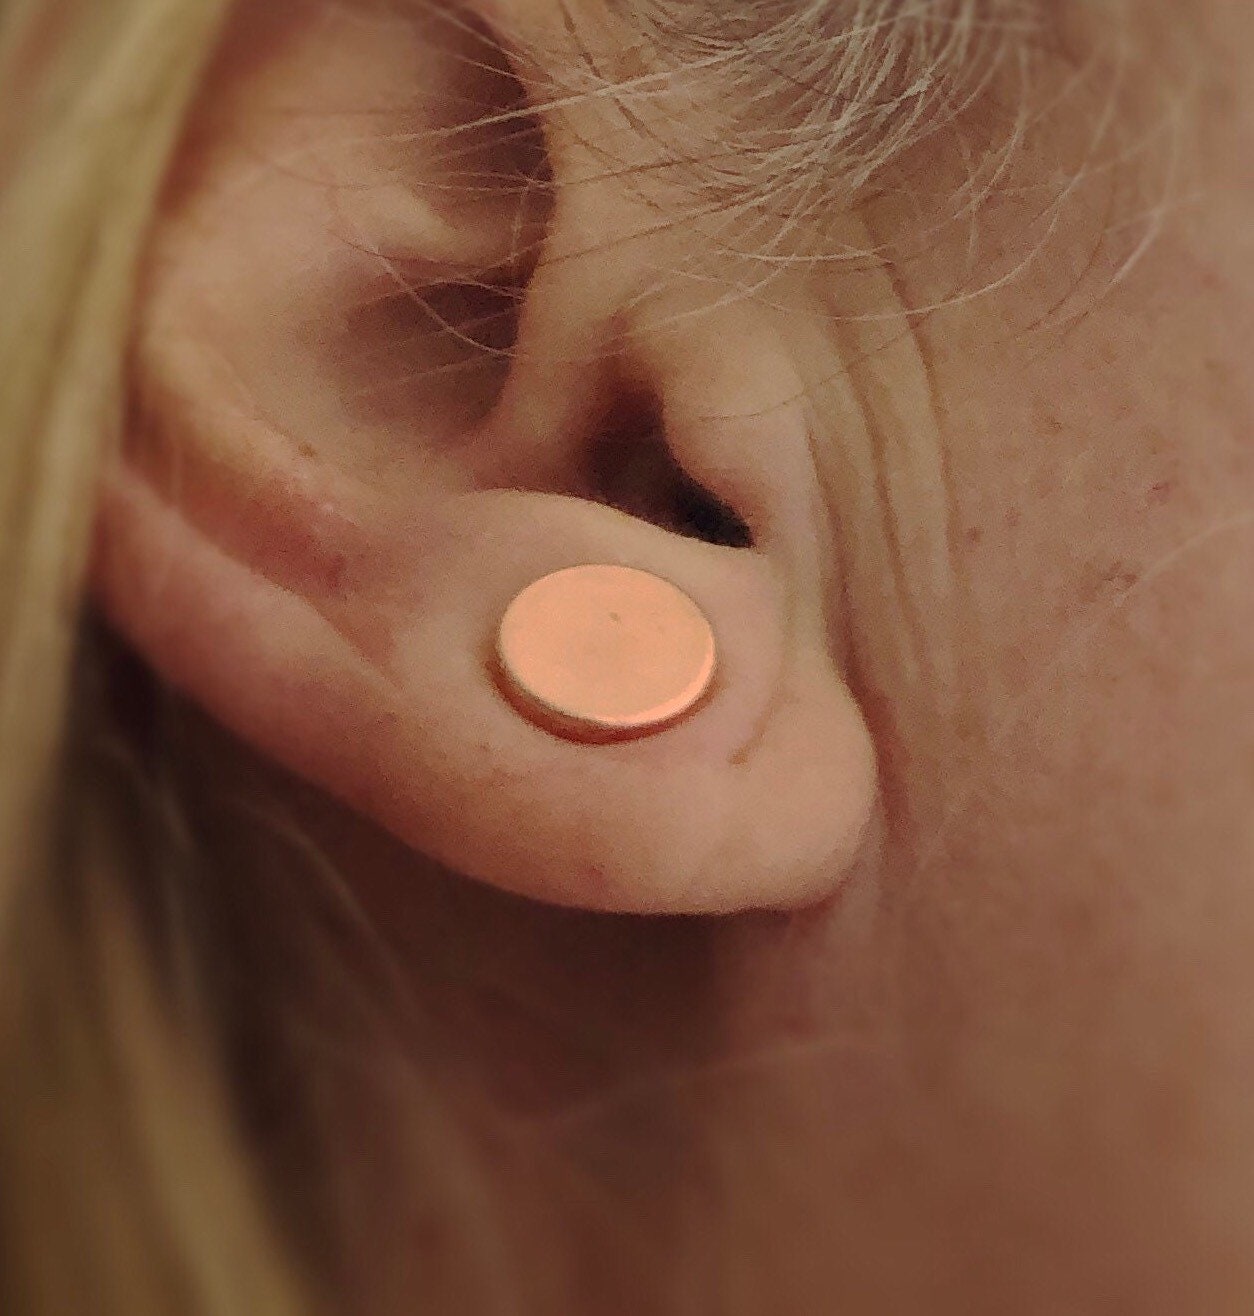 Best Deal for Keloid Pressure Earring (M, Black) Clip On Earring